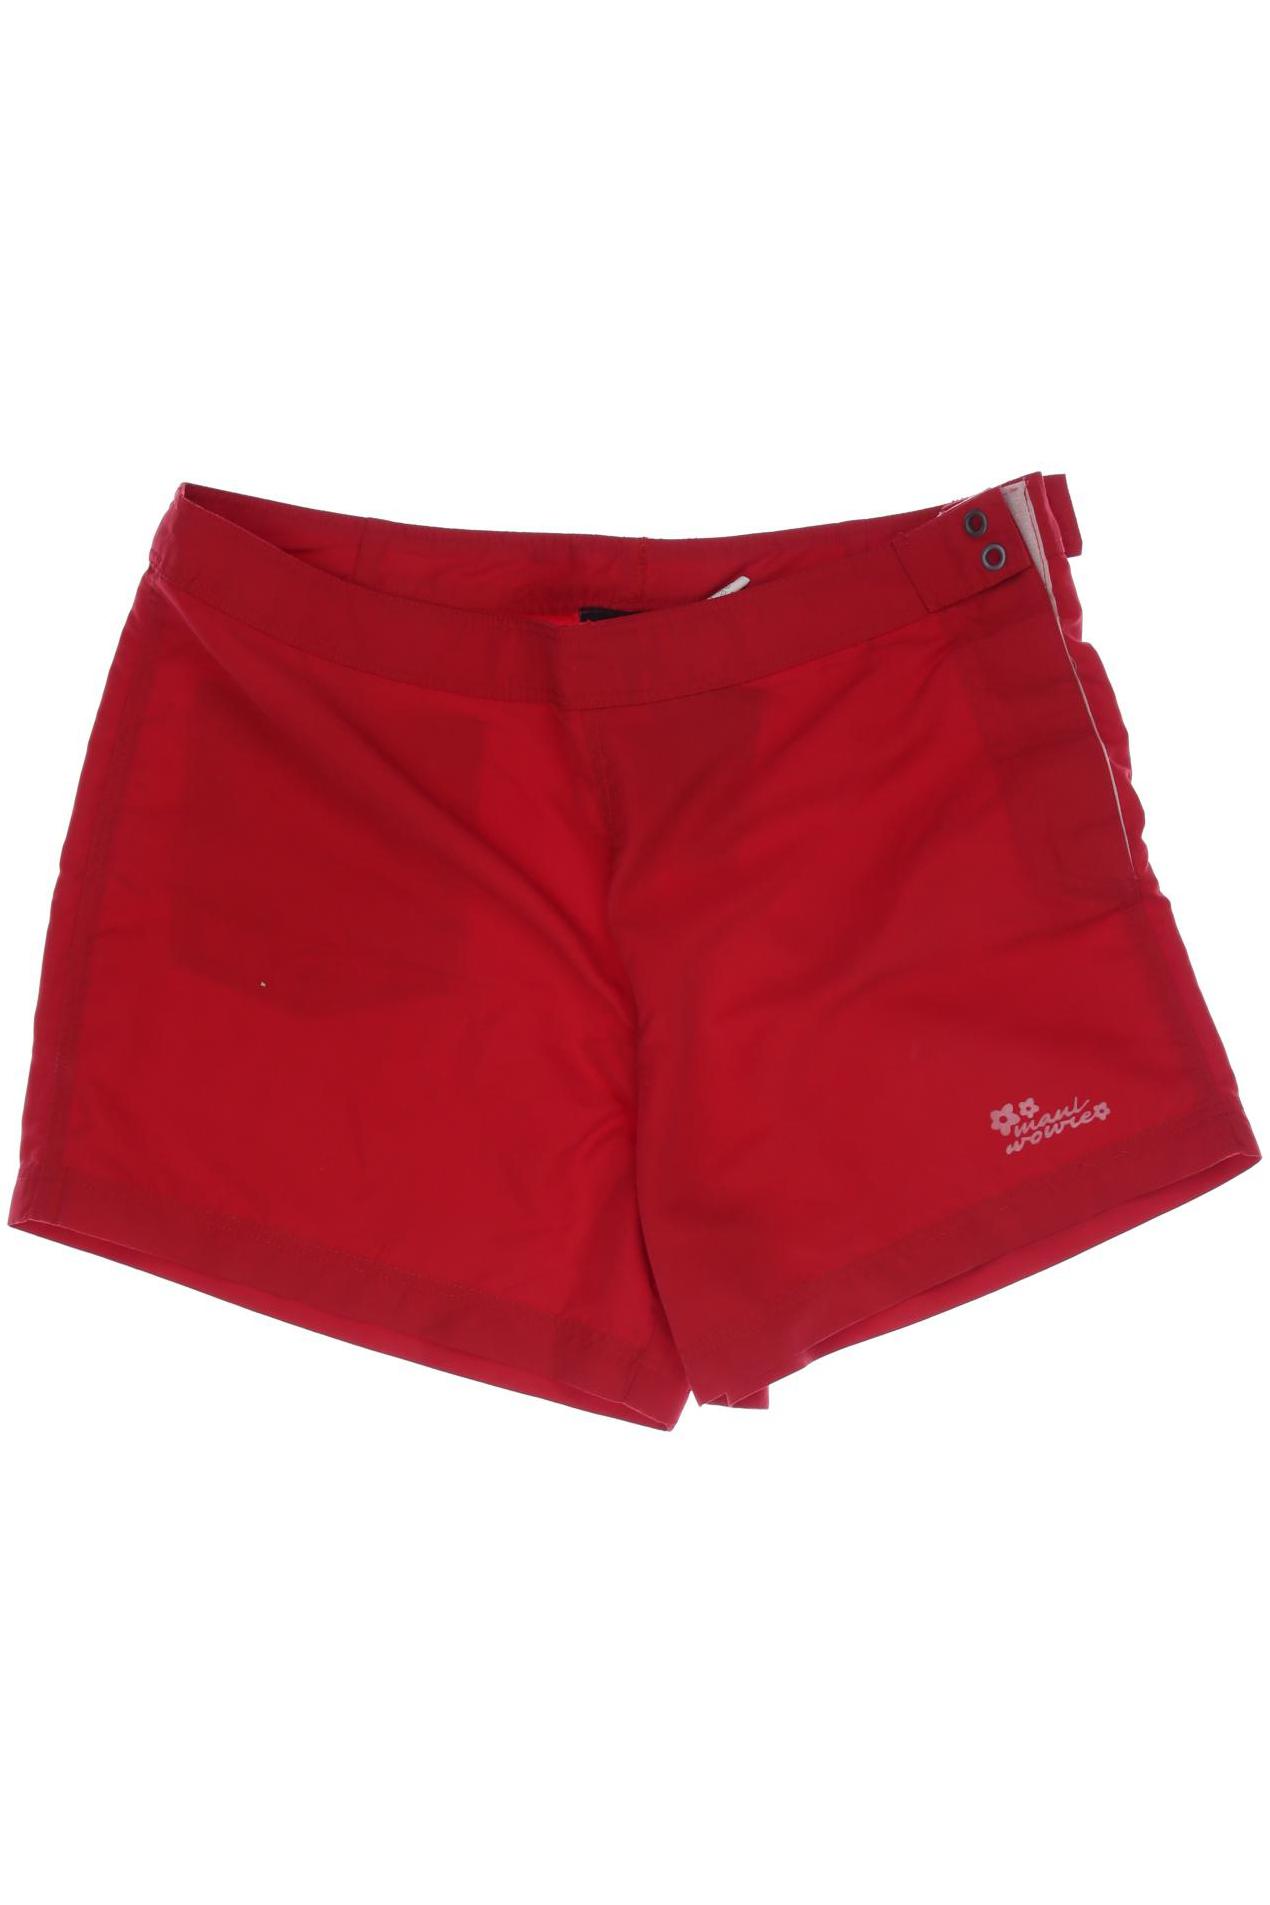 Maui Wowie Damen Shorts, rot, Gr. 38 von maui wowie